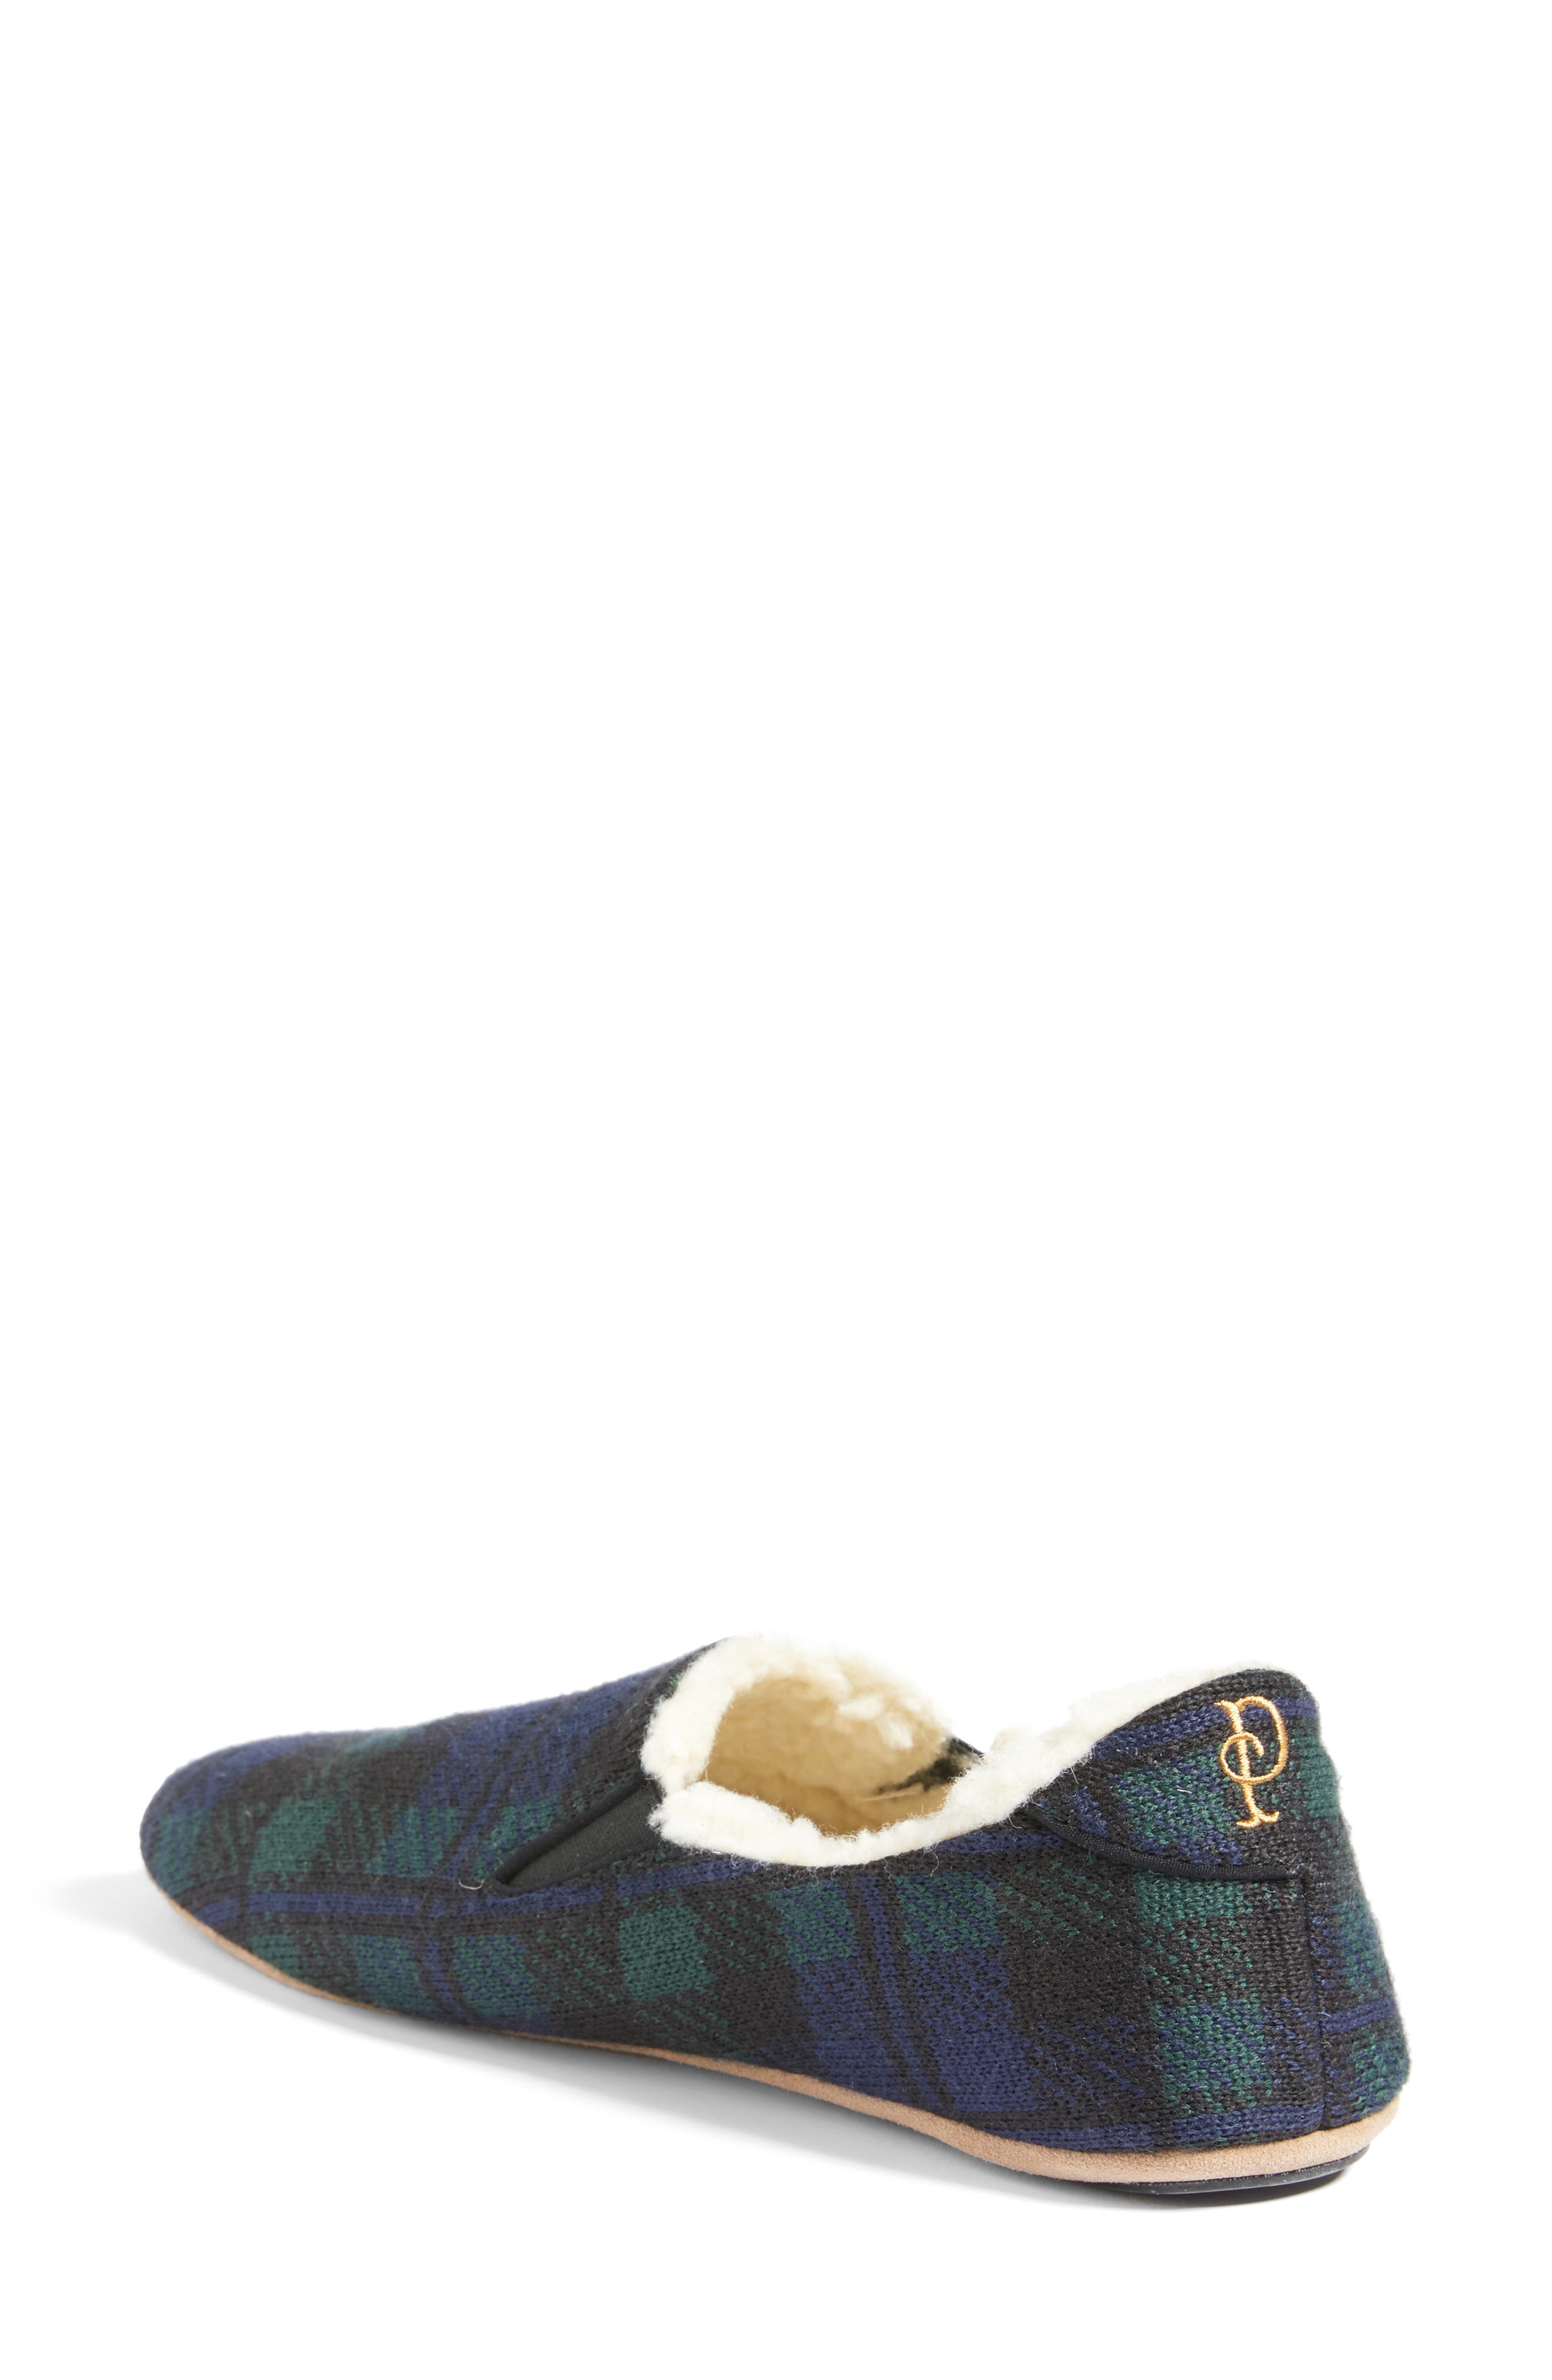 pendleton nomad slippers